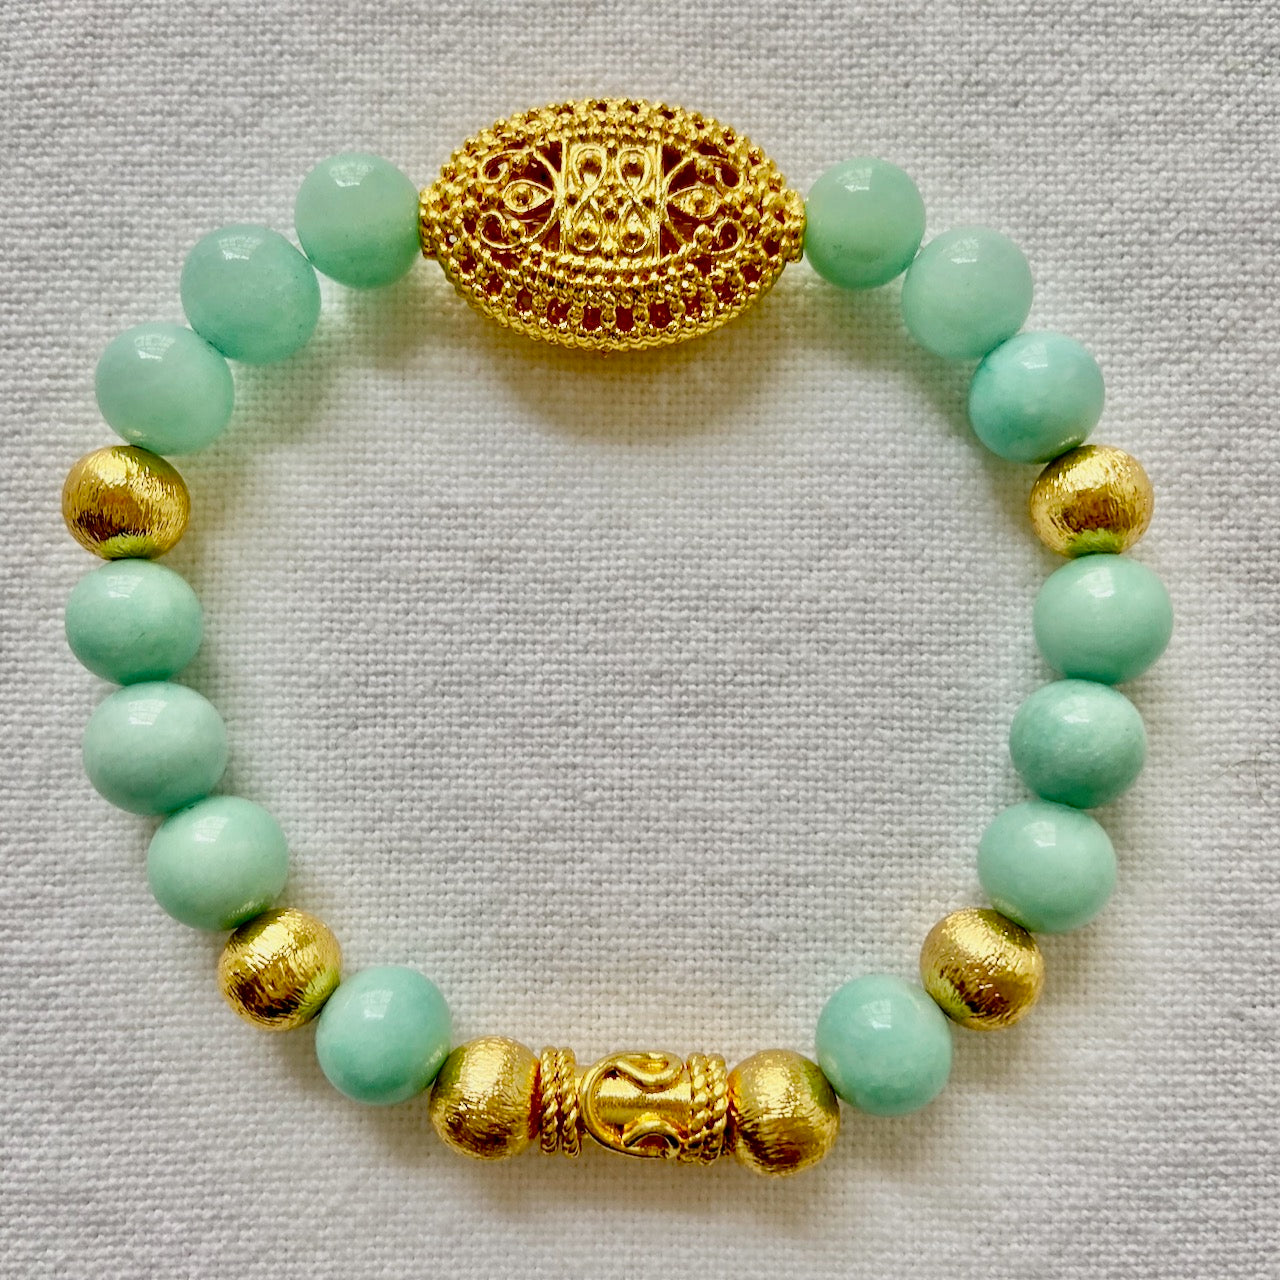 Green "Burma" Jade (Light Green) Gemstone with an 18k Gold Filigree Beaded Bracelet